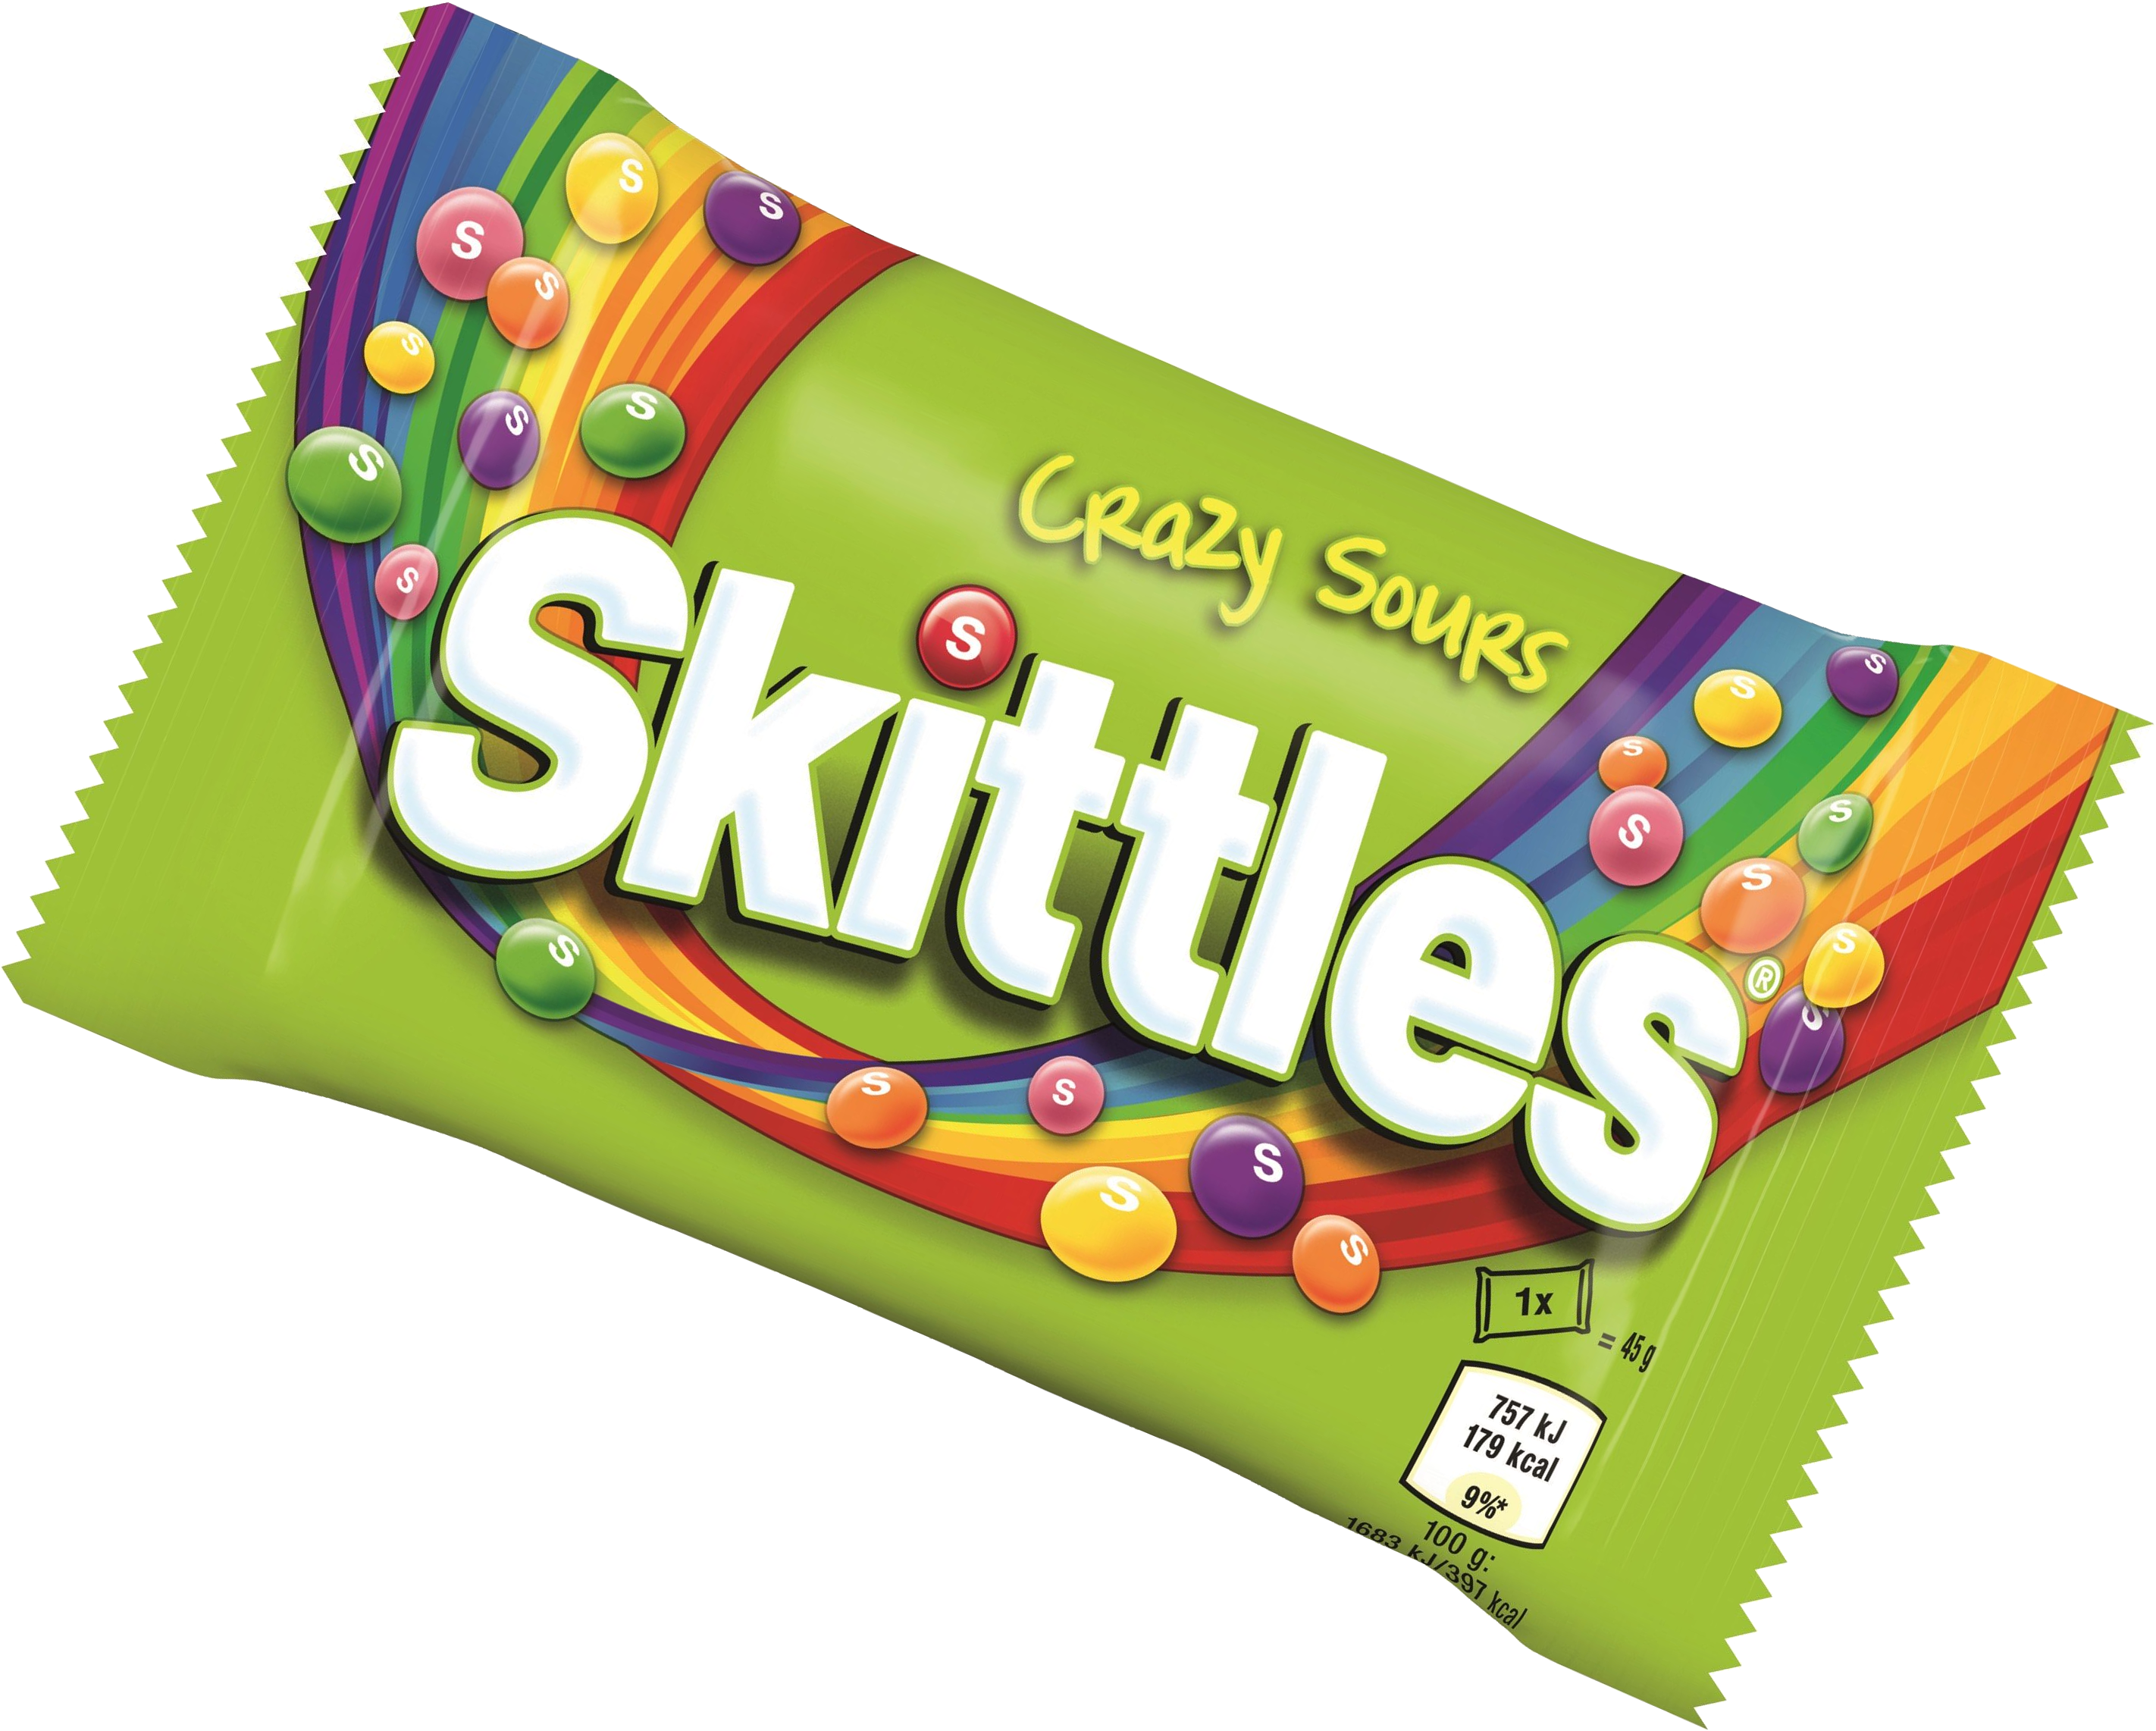 Biểu trưng Skittles Skittles